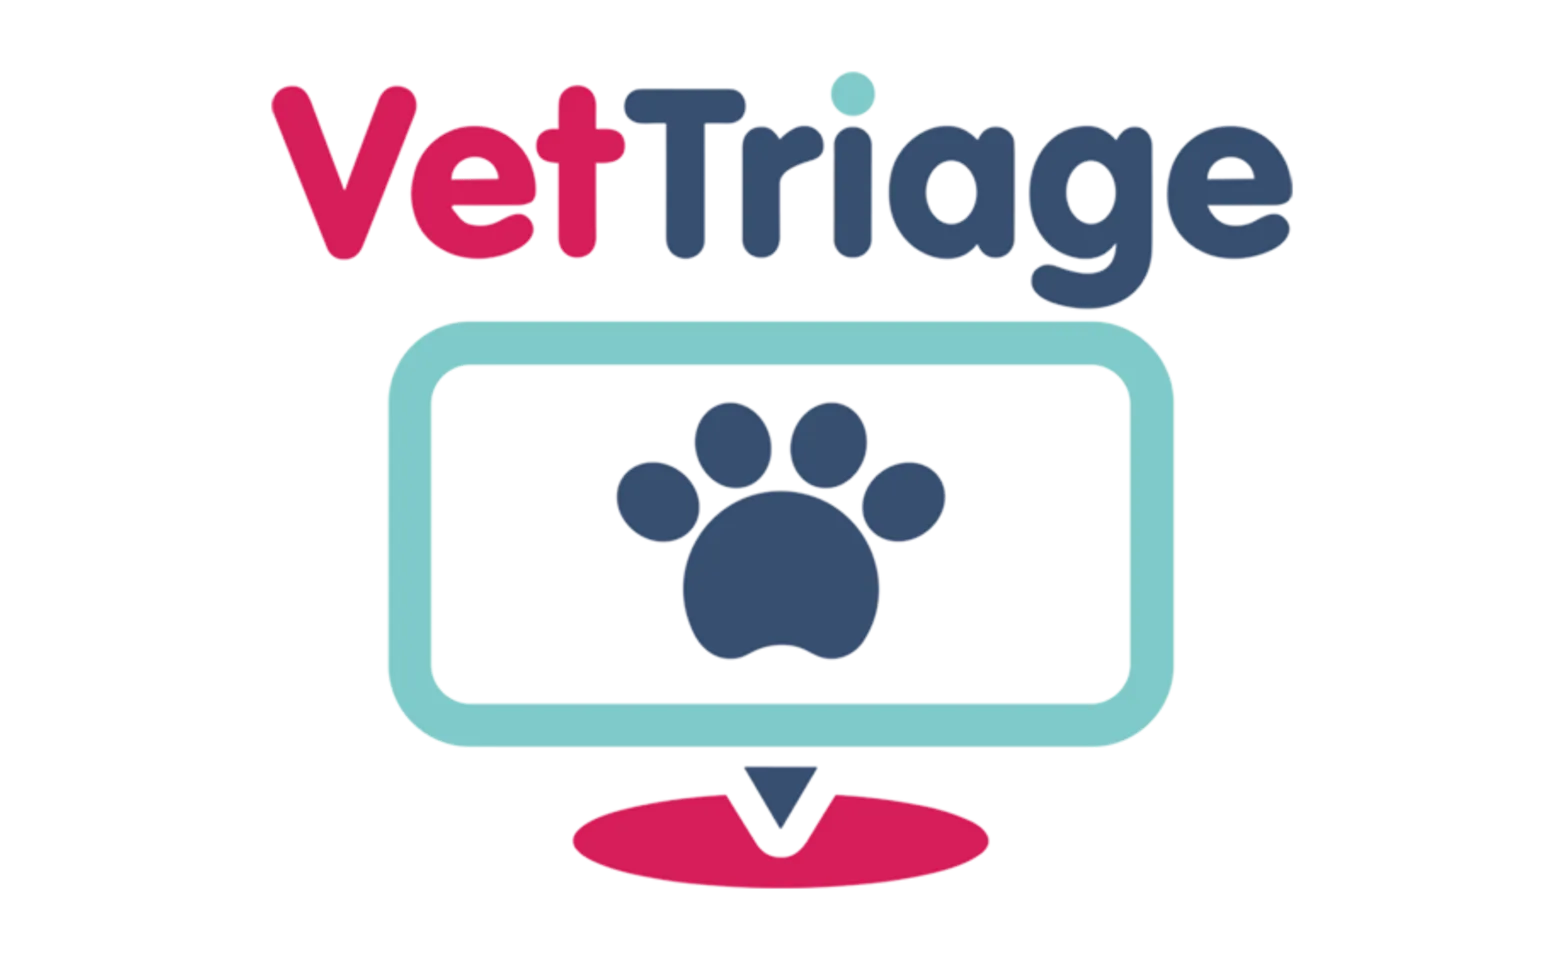 VetTriage logo